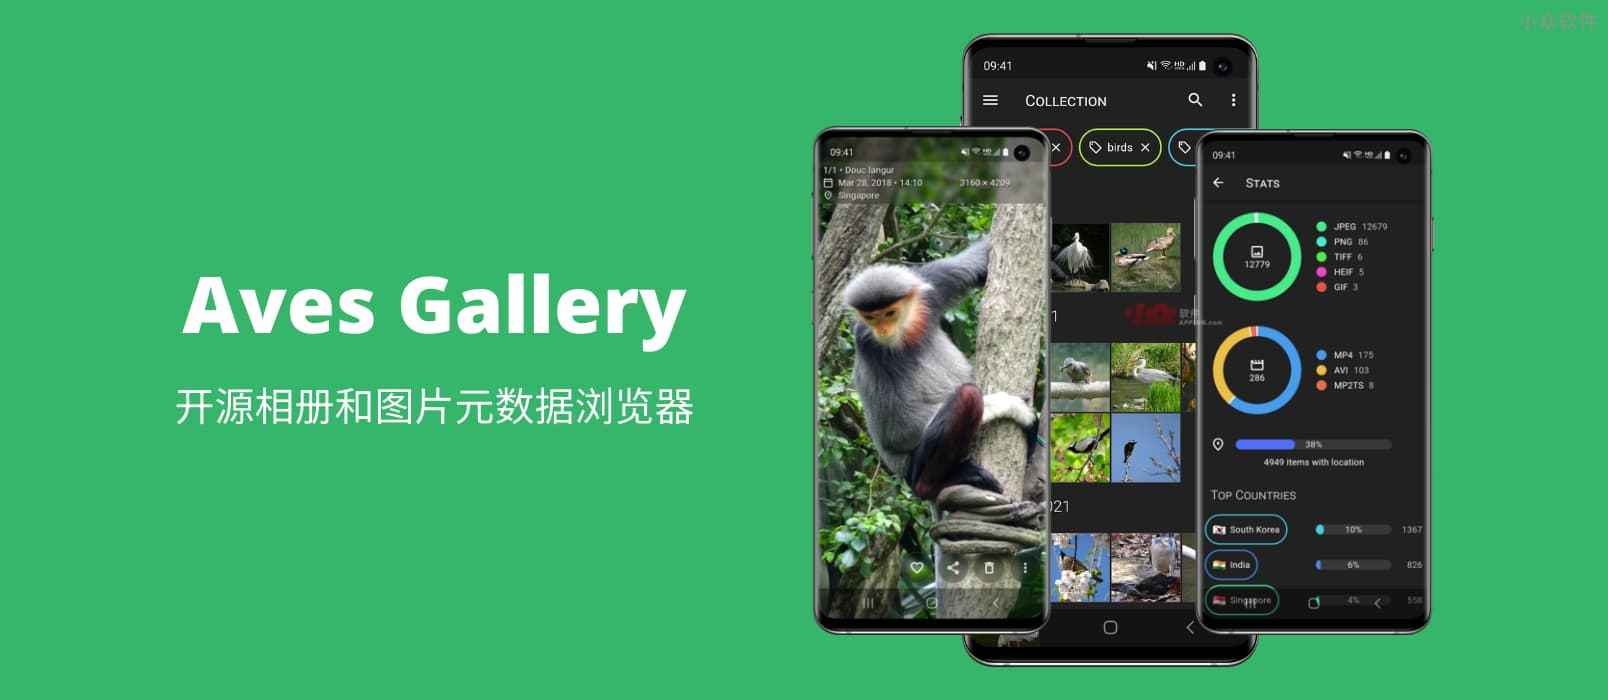 Aves Gallery – 开源相册和图片 EXIF 原数据浏览器[Android]